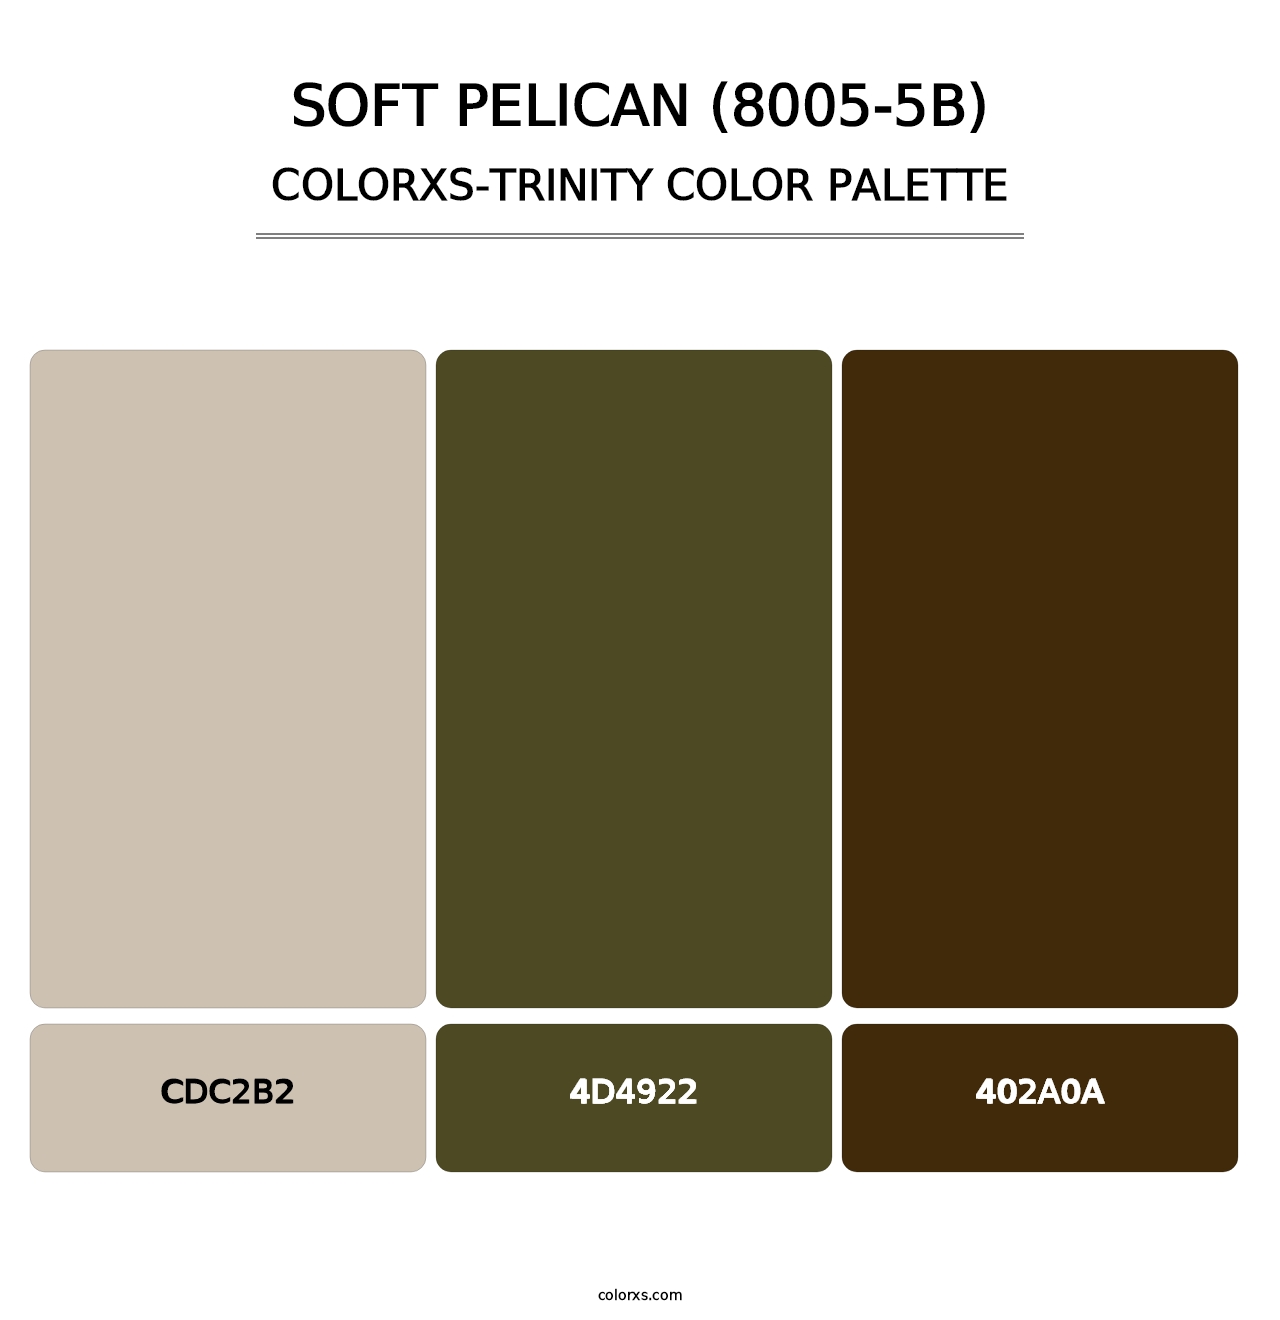 Soft Pelican (8005-5B) - Colorxs Trinity Palette